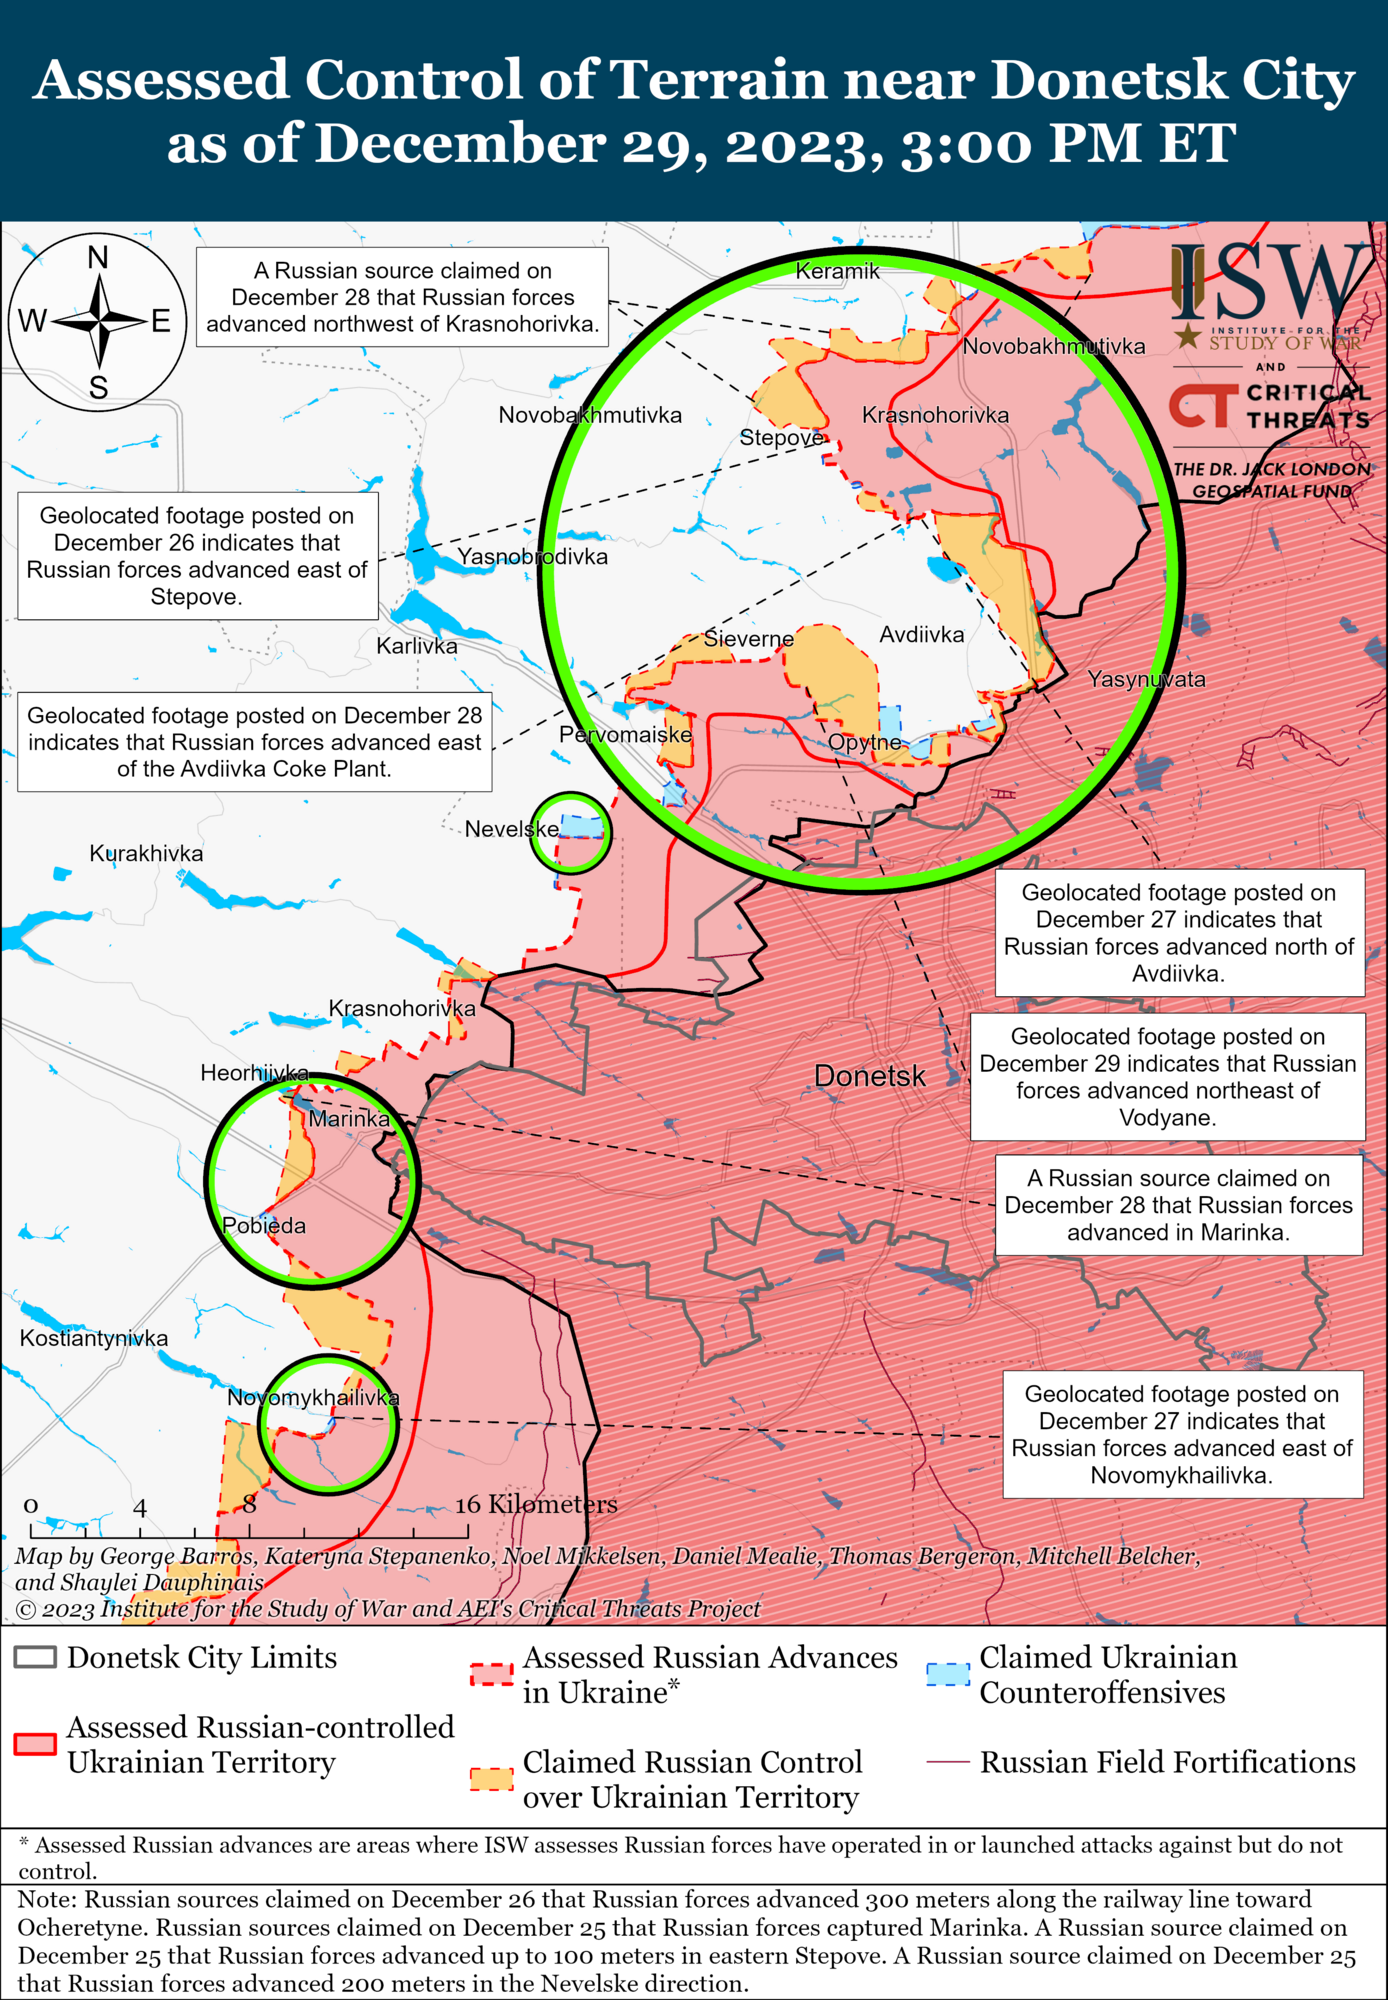 Positional battles continued around Avdiivka